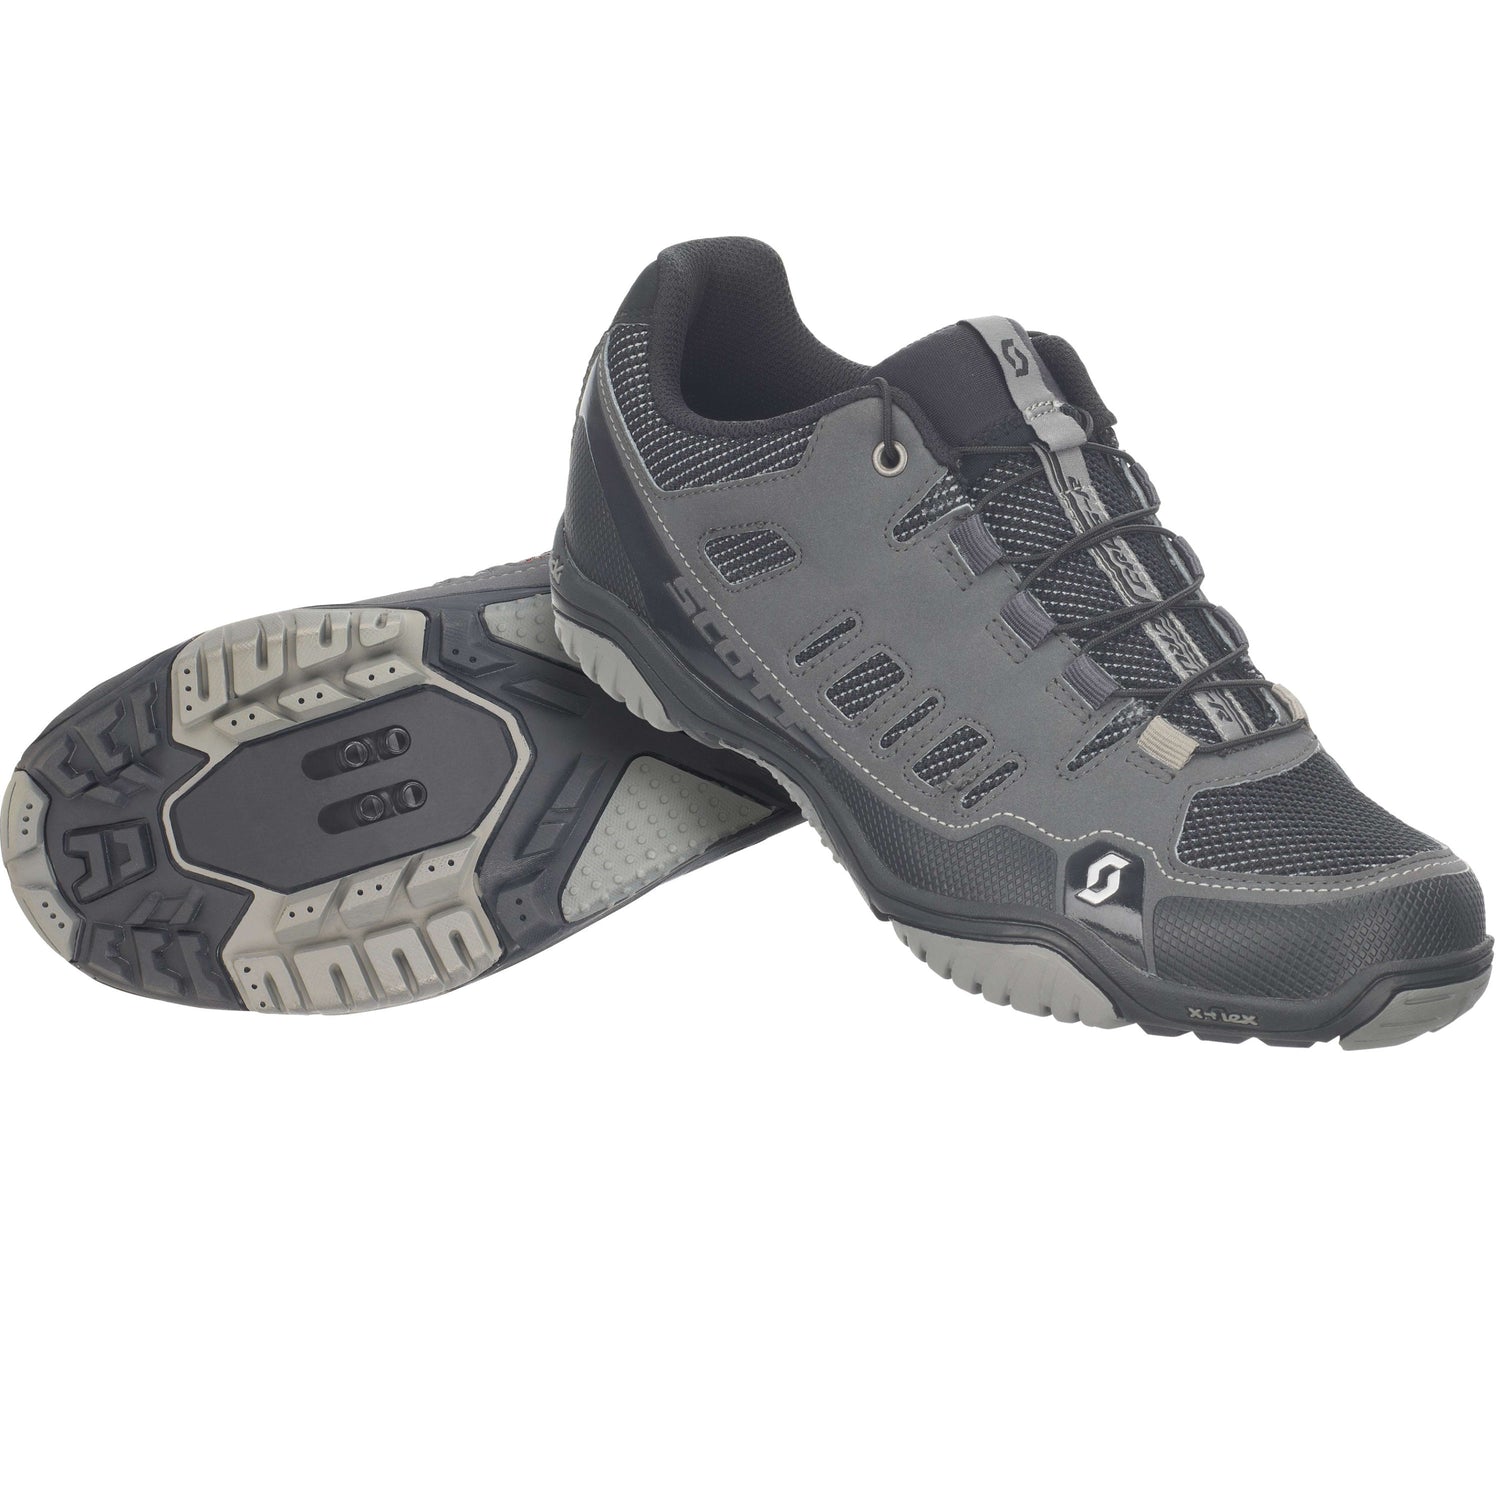 SCO Shoe Sport Crus-r - Anthracite/Black | My Ride